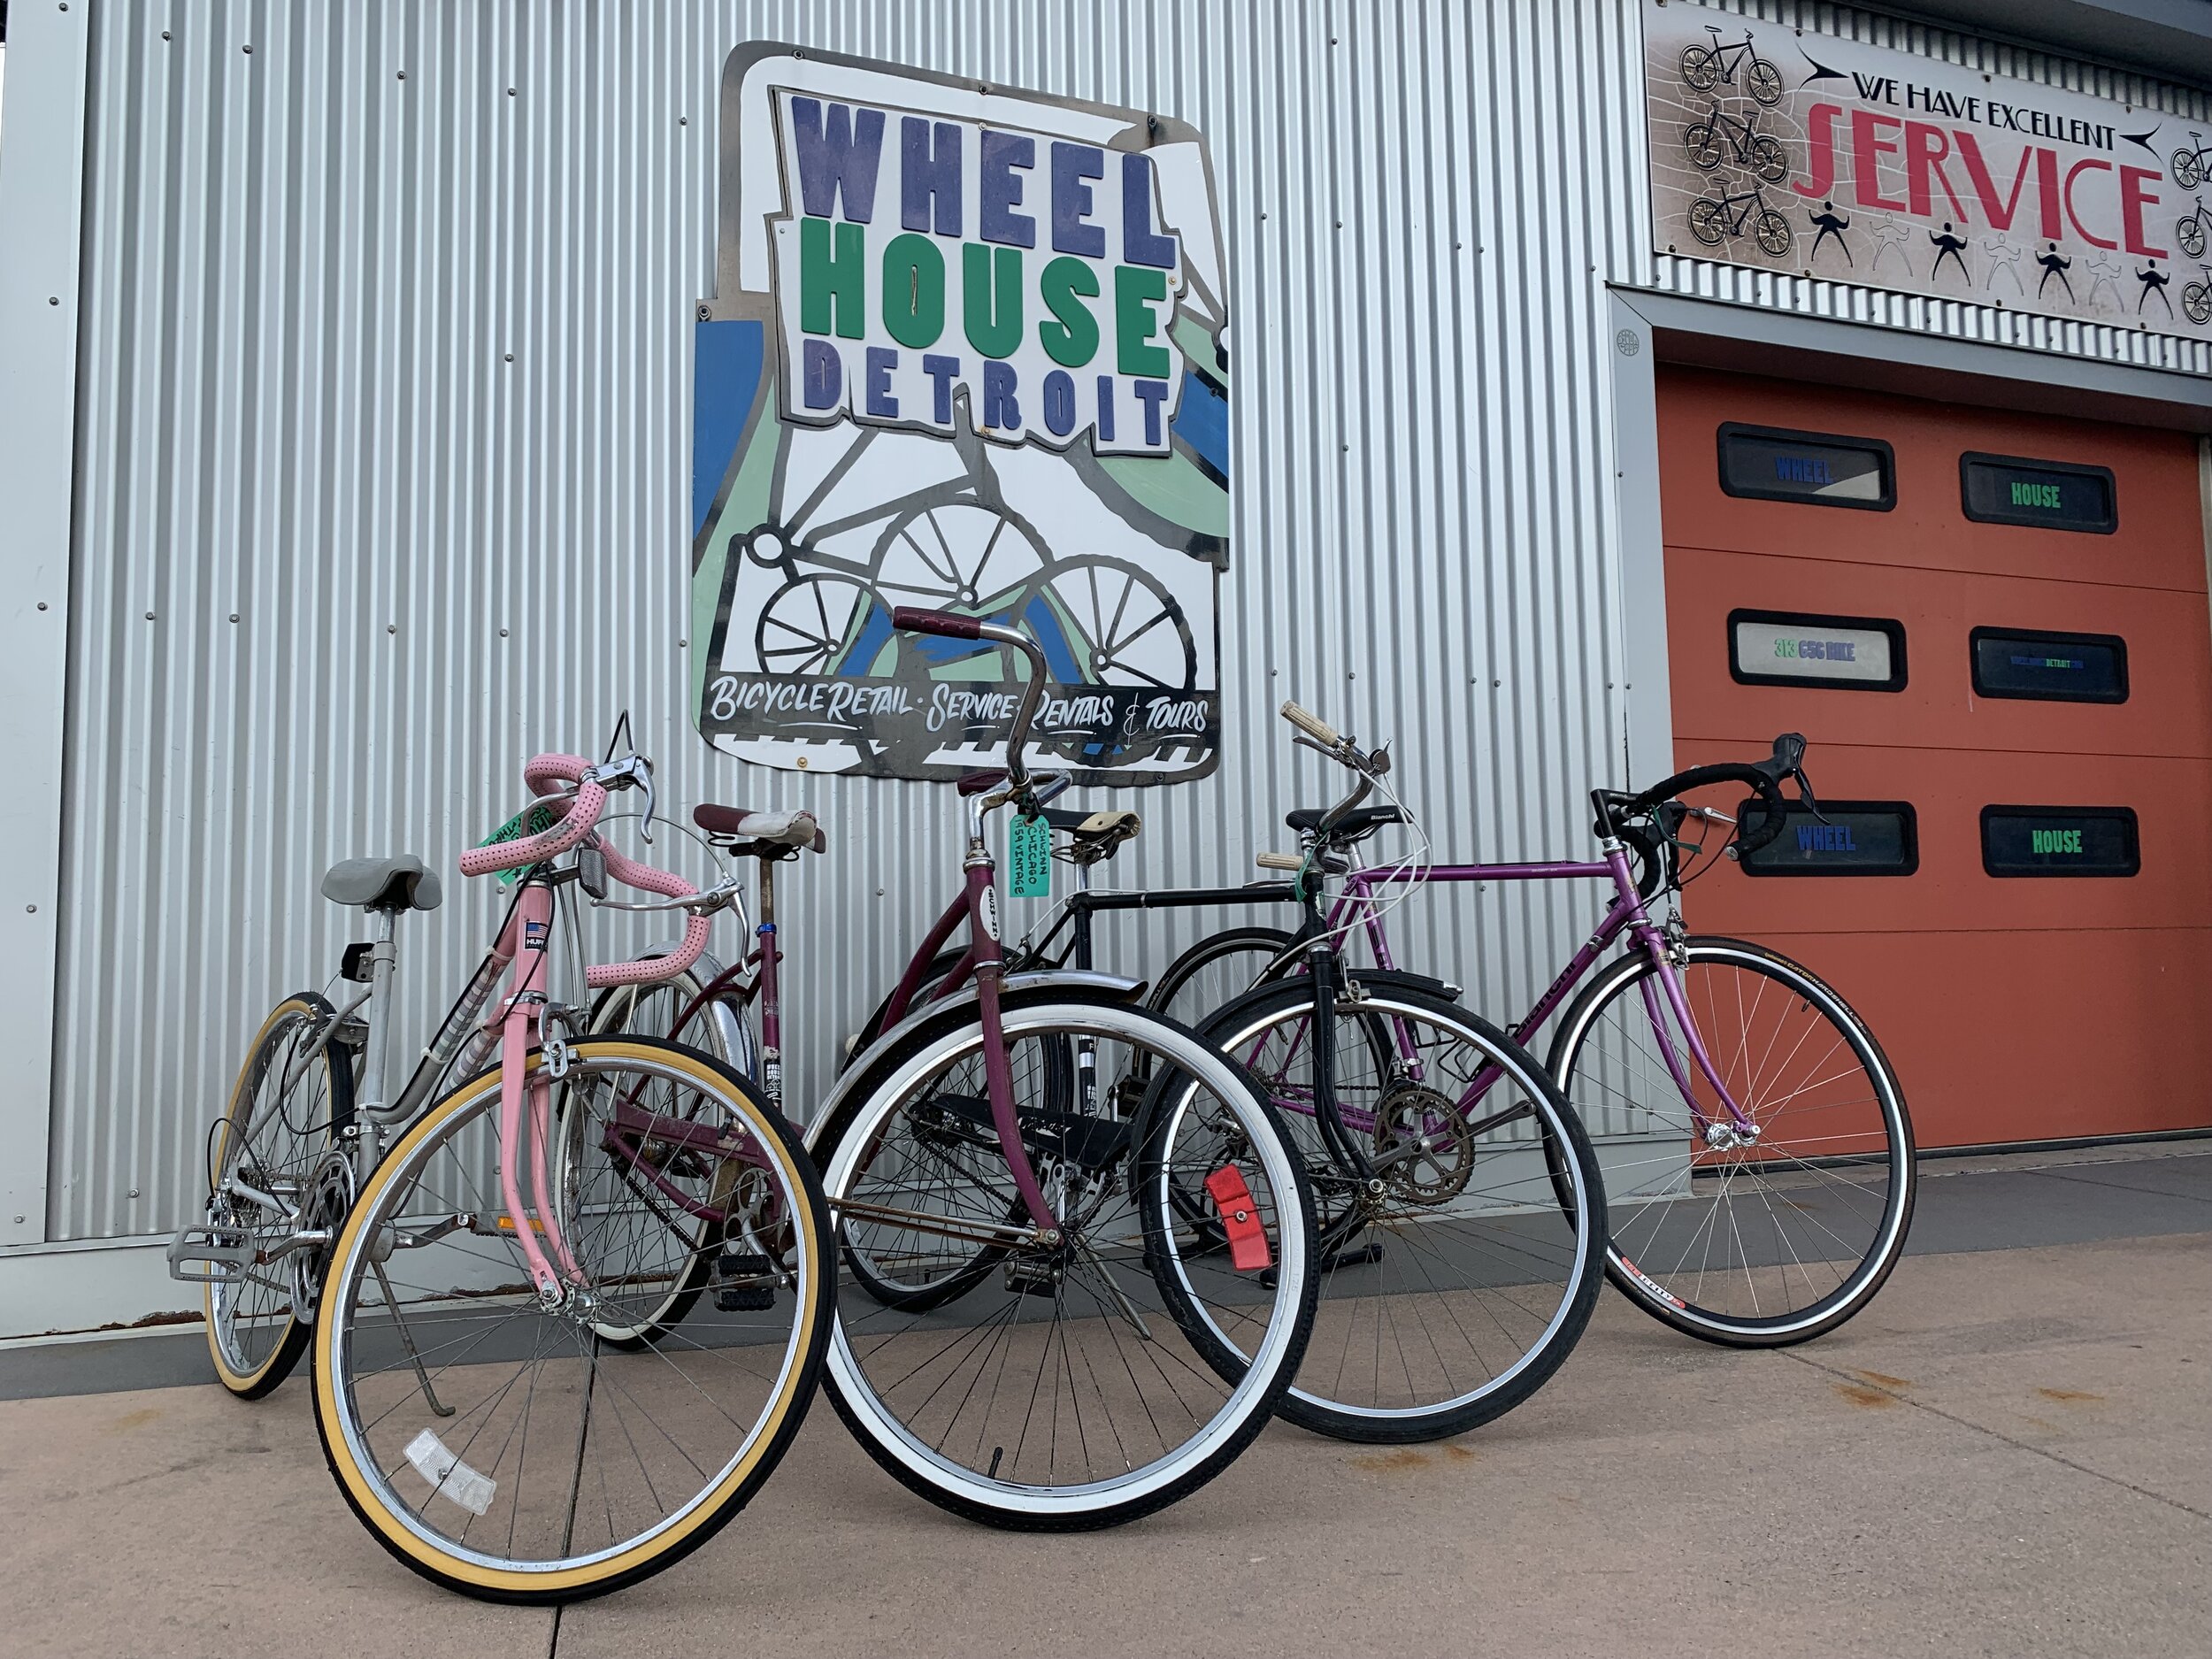 July Used Bike Sale — Wheelhouse Detroit